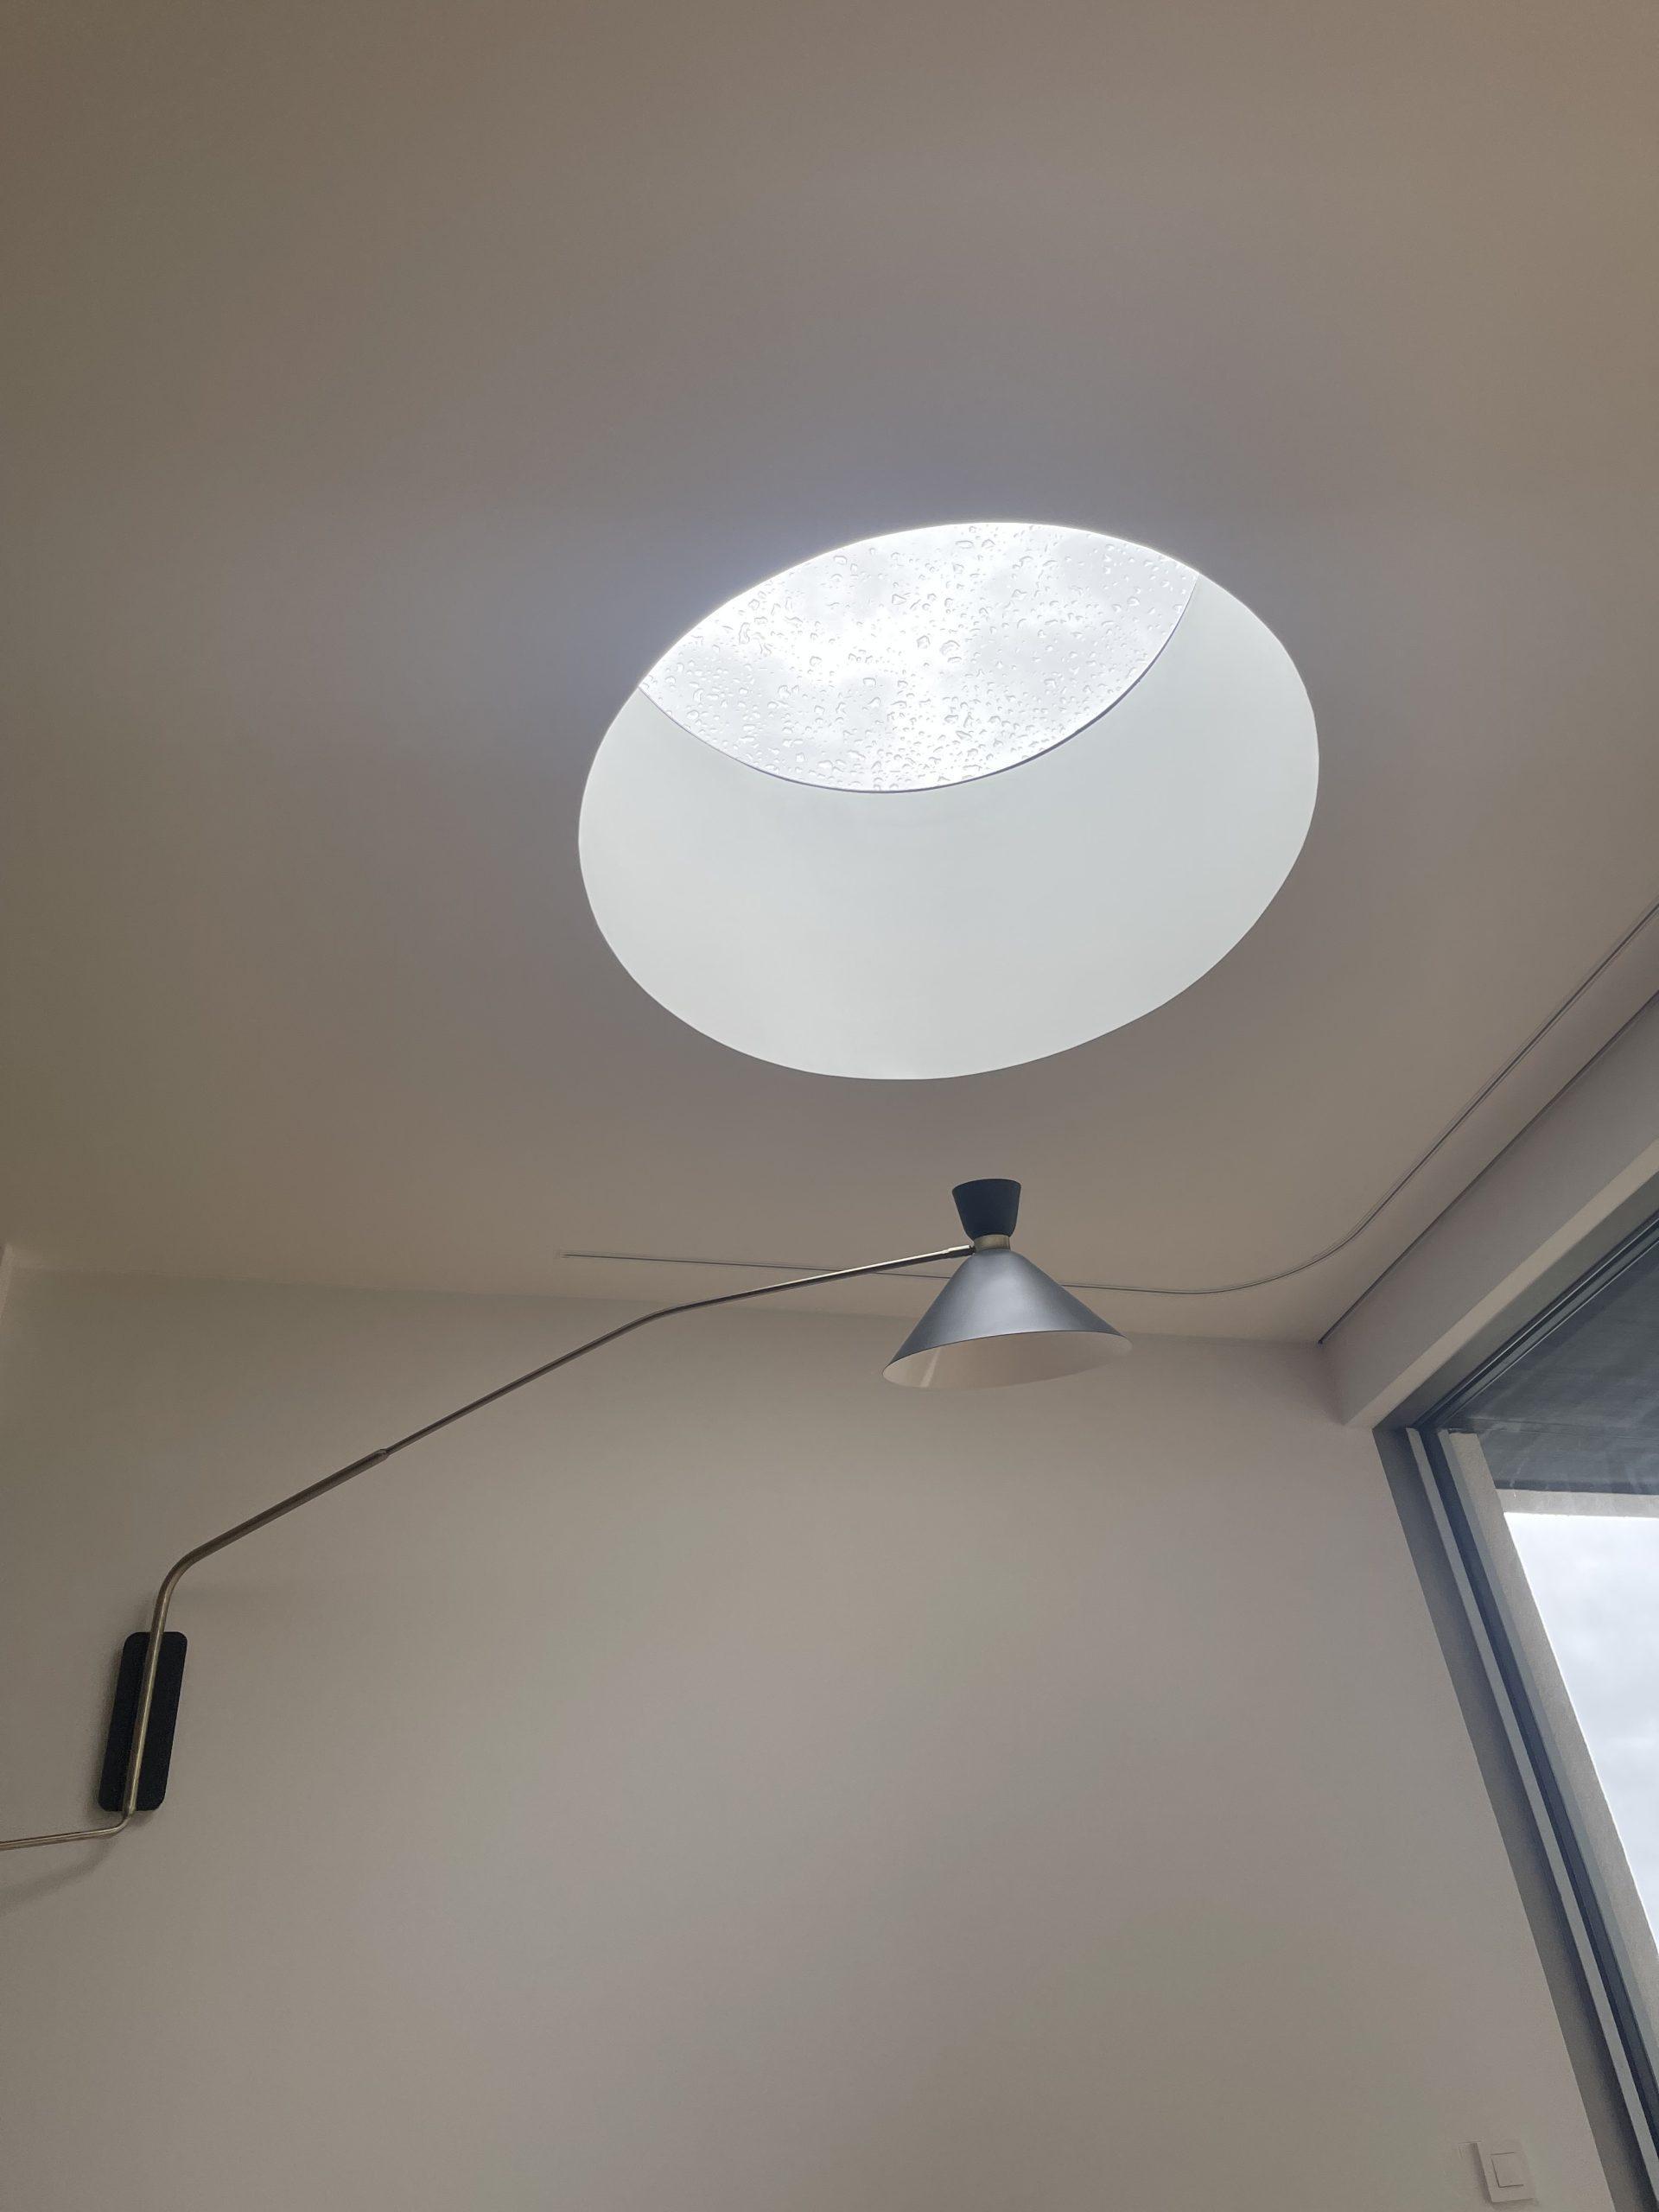 Frameless circular round skylight rooflight by overhead glazing